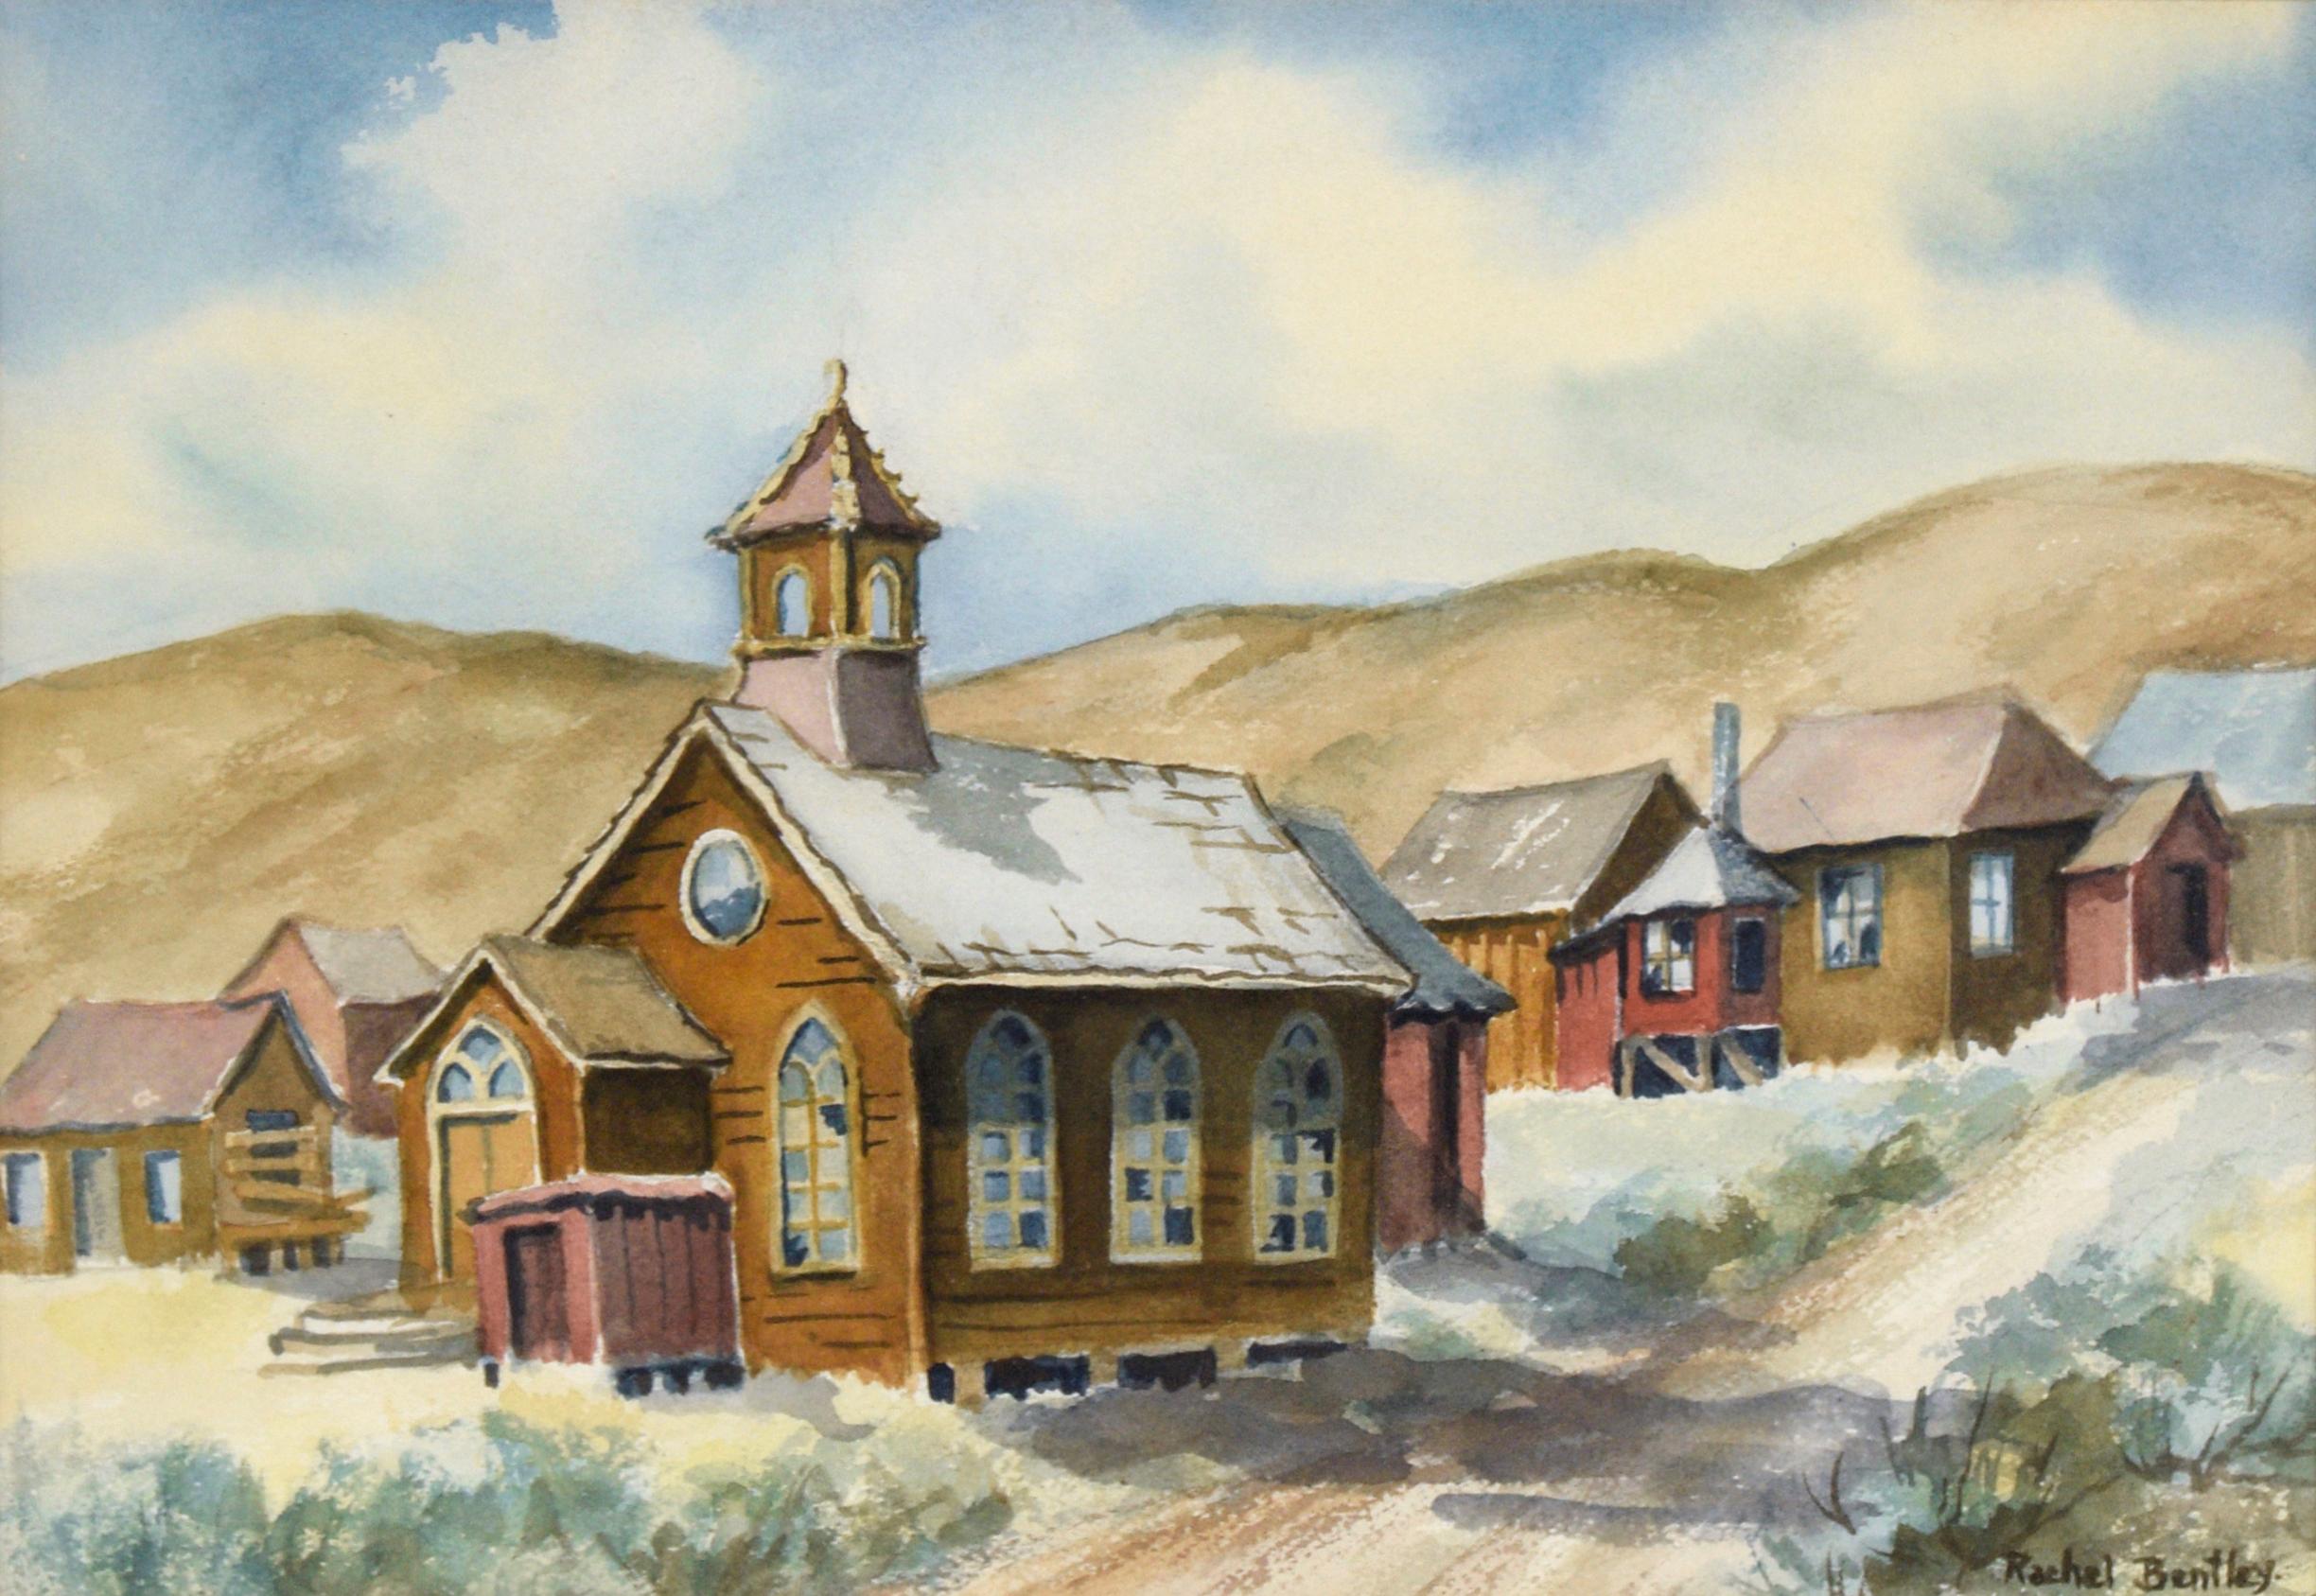 Methodist Church in Old Bodie Ghost Town - California - Watercolor on Paper - Art by Rachel Bentley